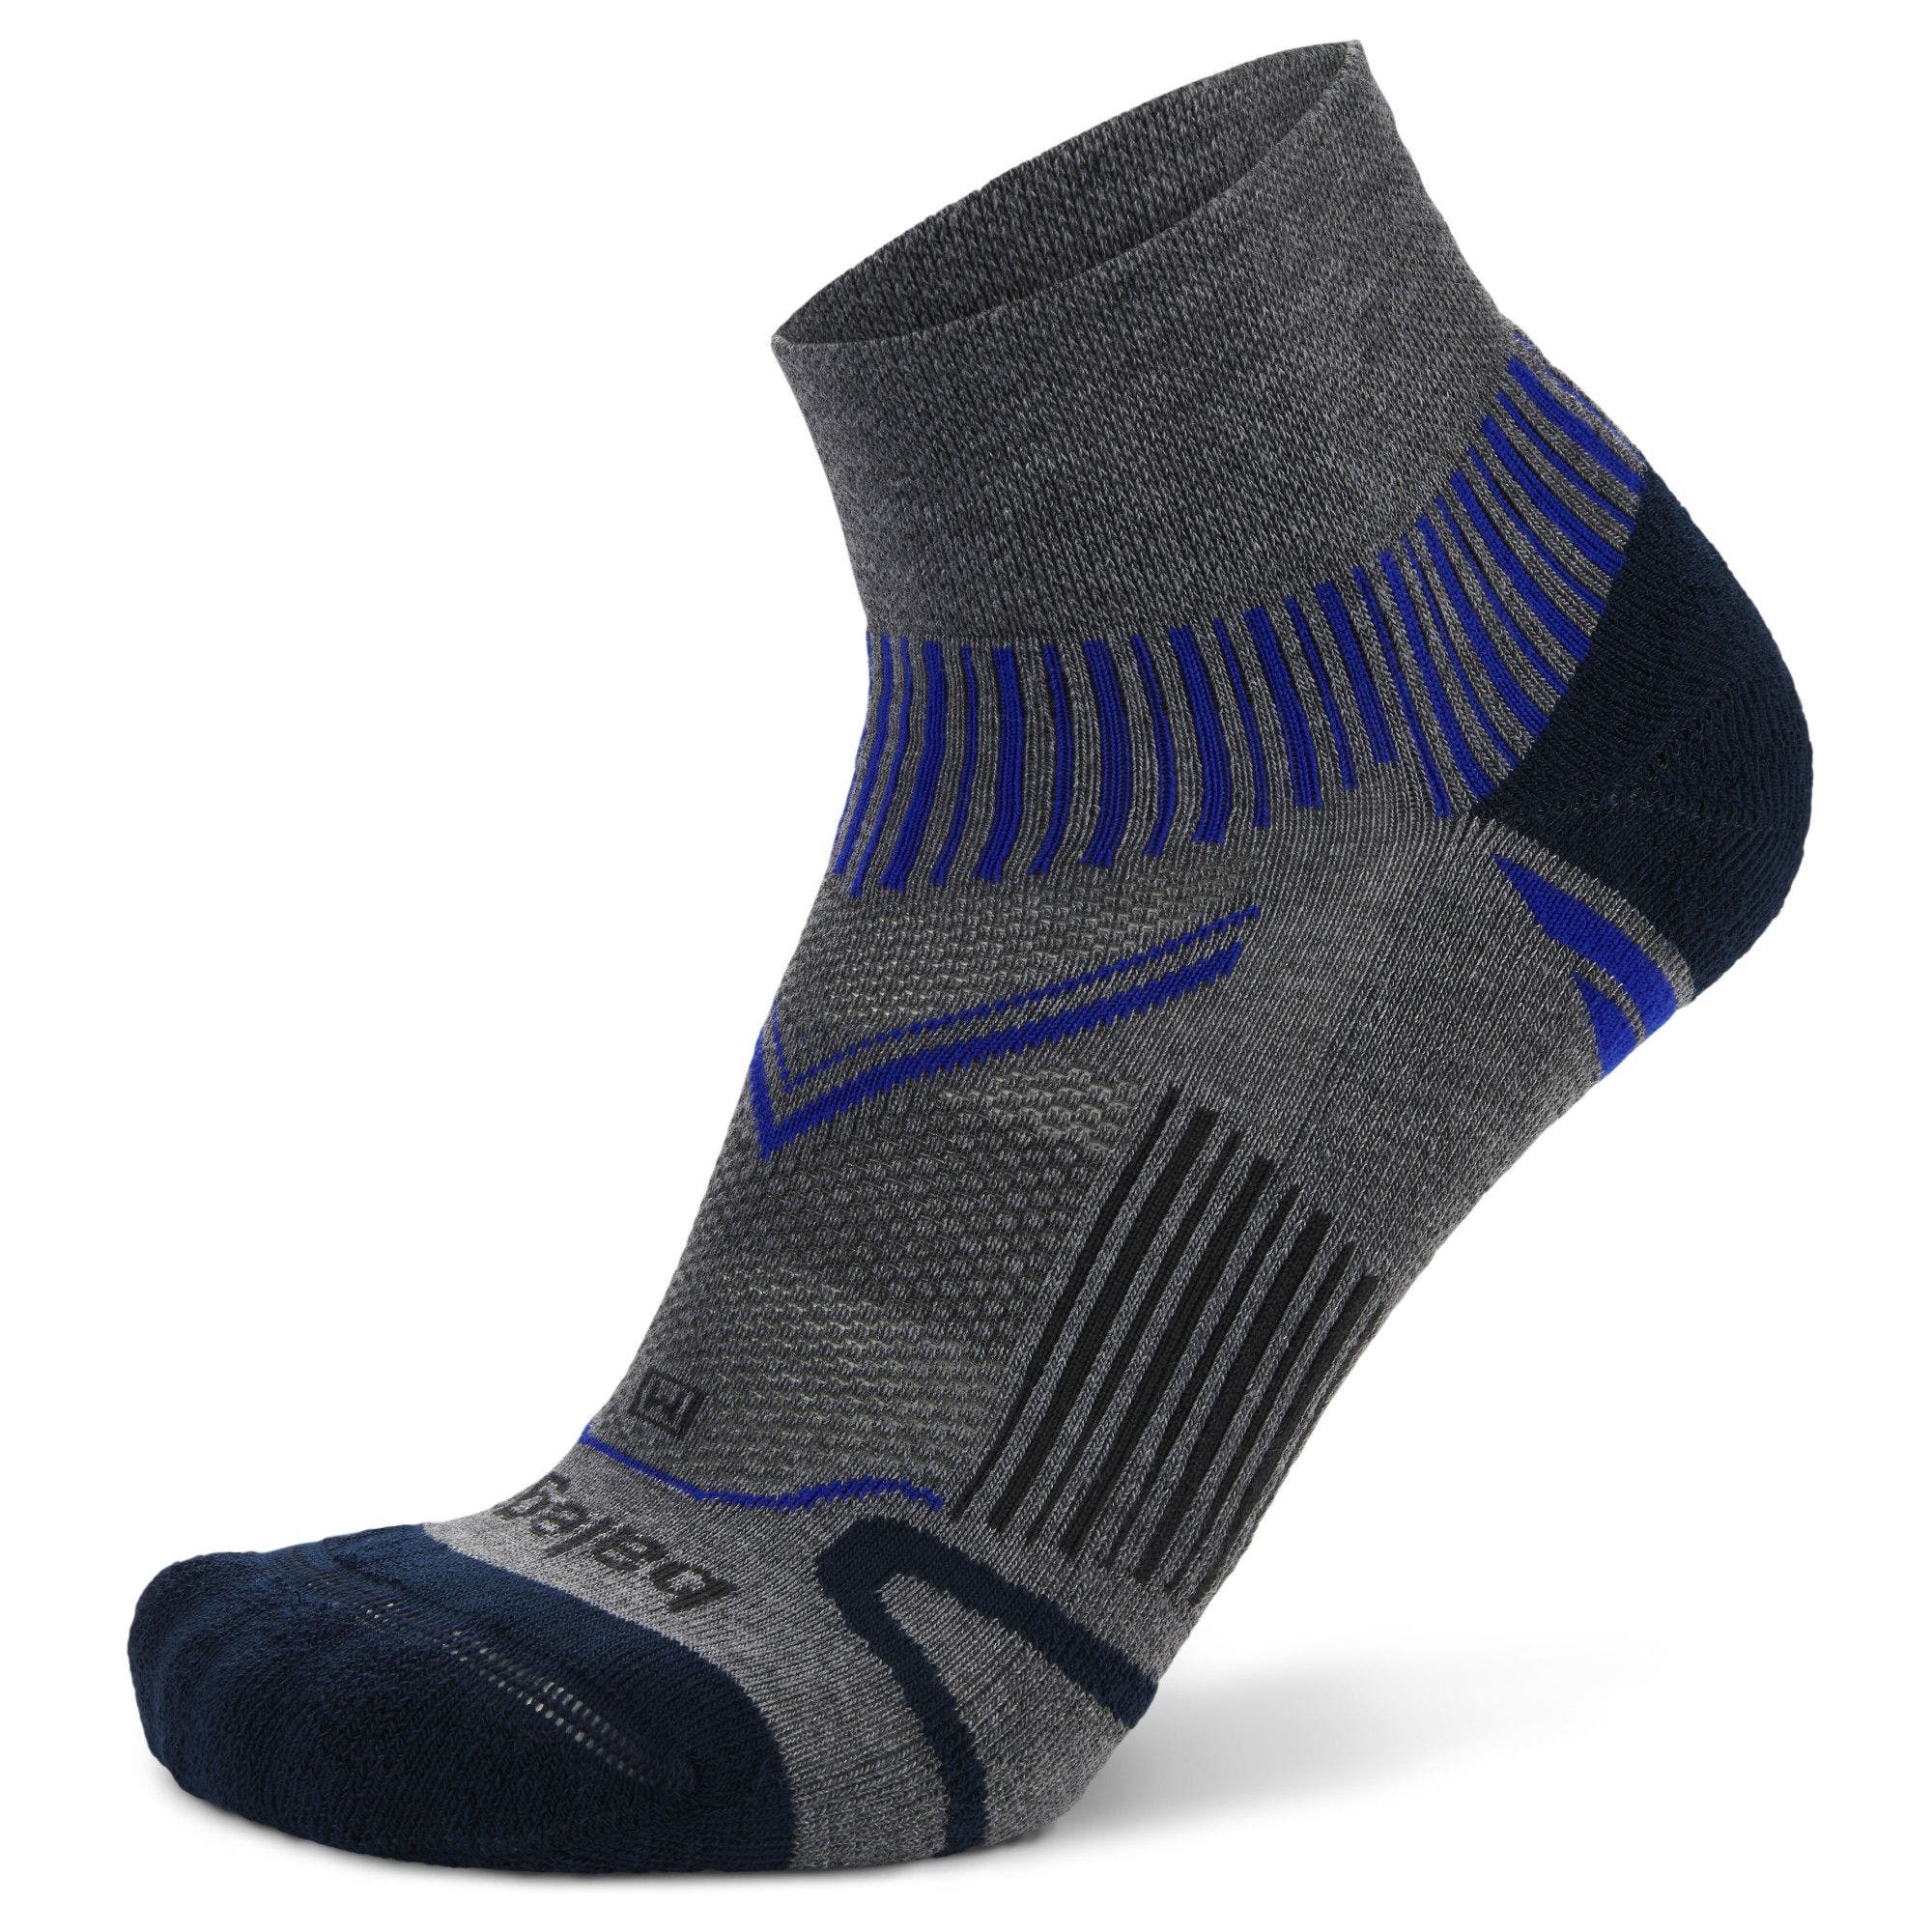 Enduro Quarter Running Socks